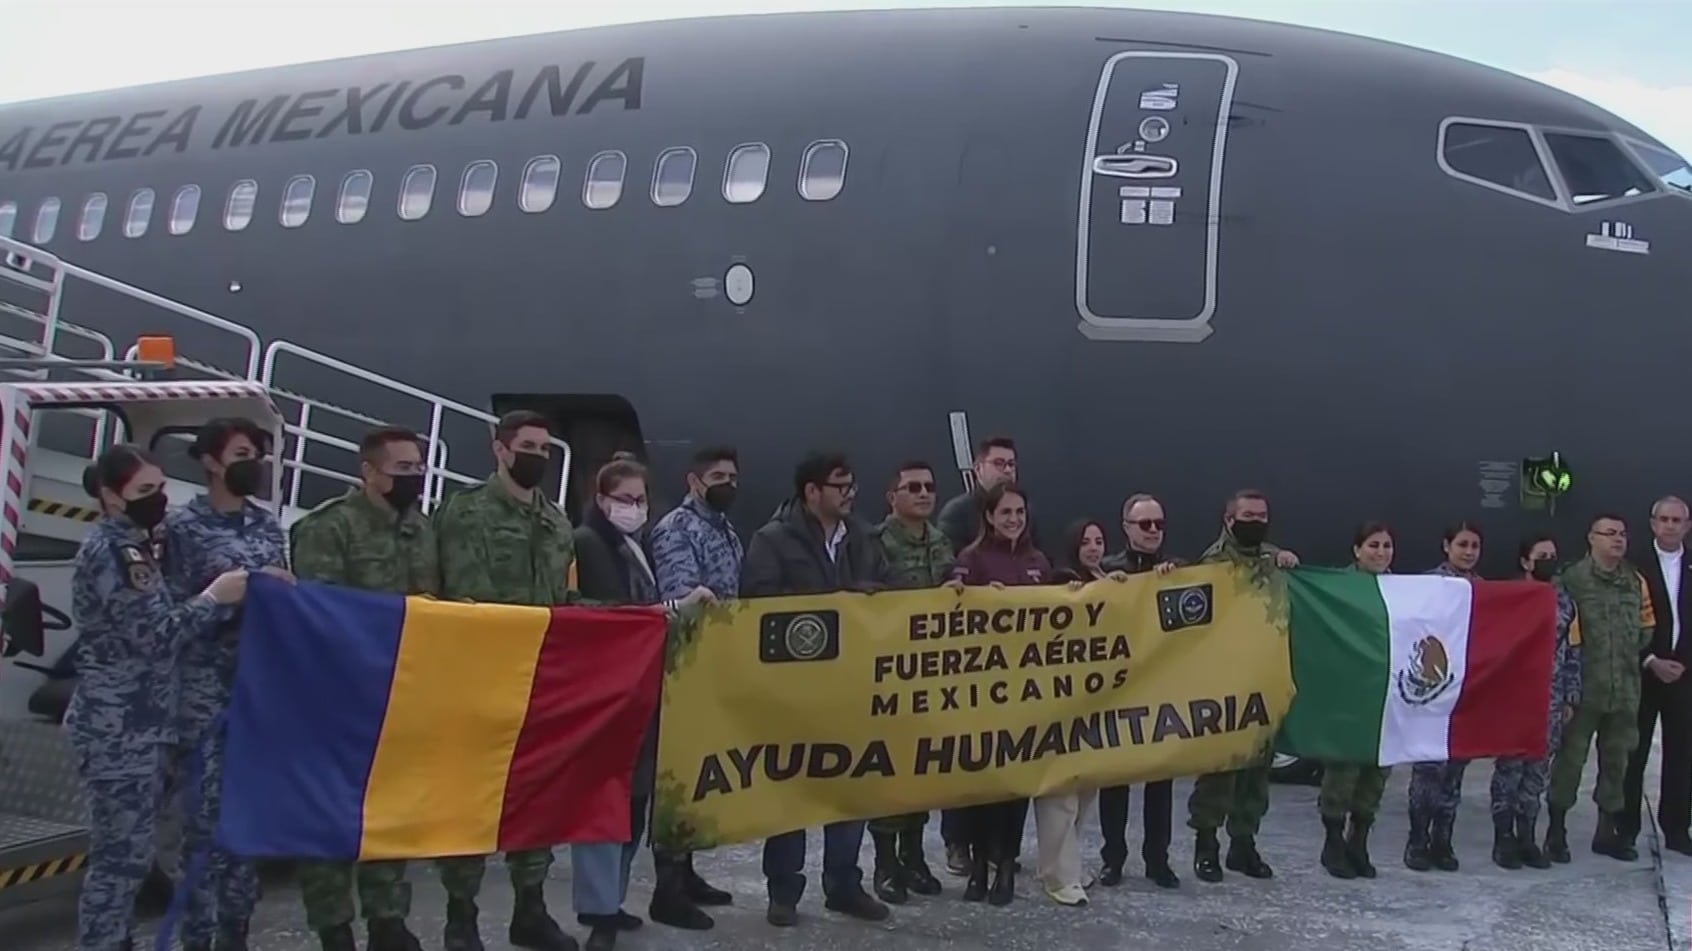 llega segundo vuelo de la fuerza aerea mexicana a rumania